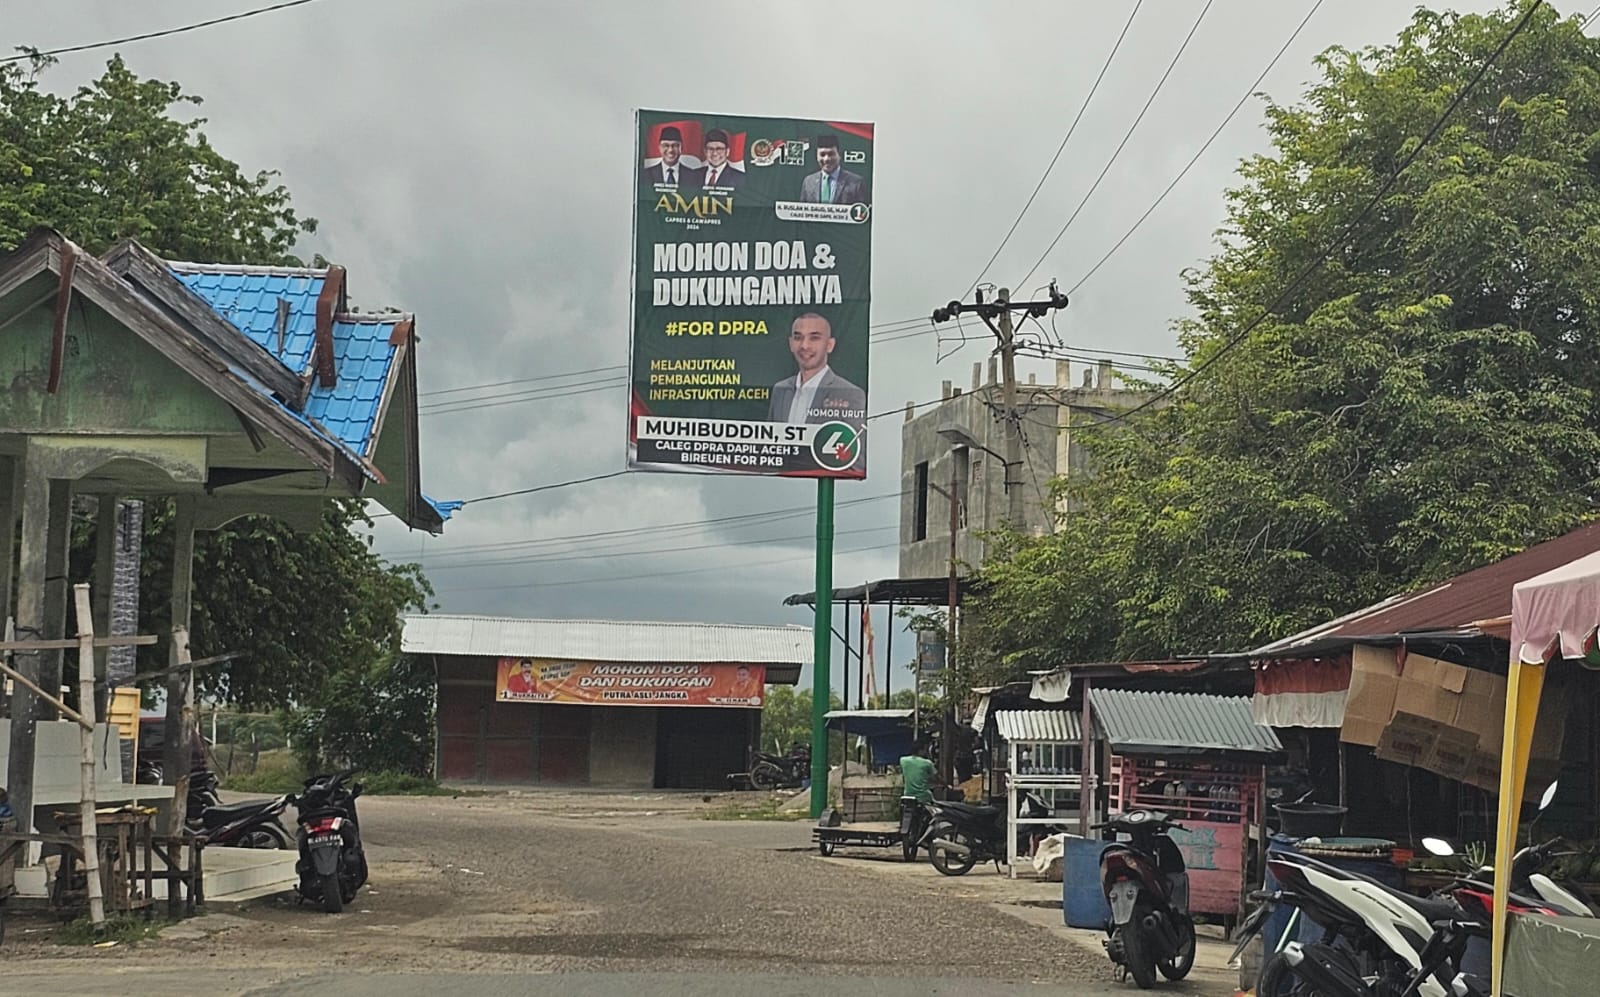 Curi Star Kampanye, Baliho Caleg Mulai Bertebaran di Bireuen